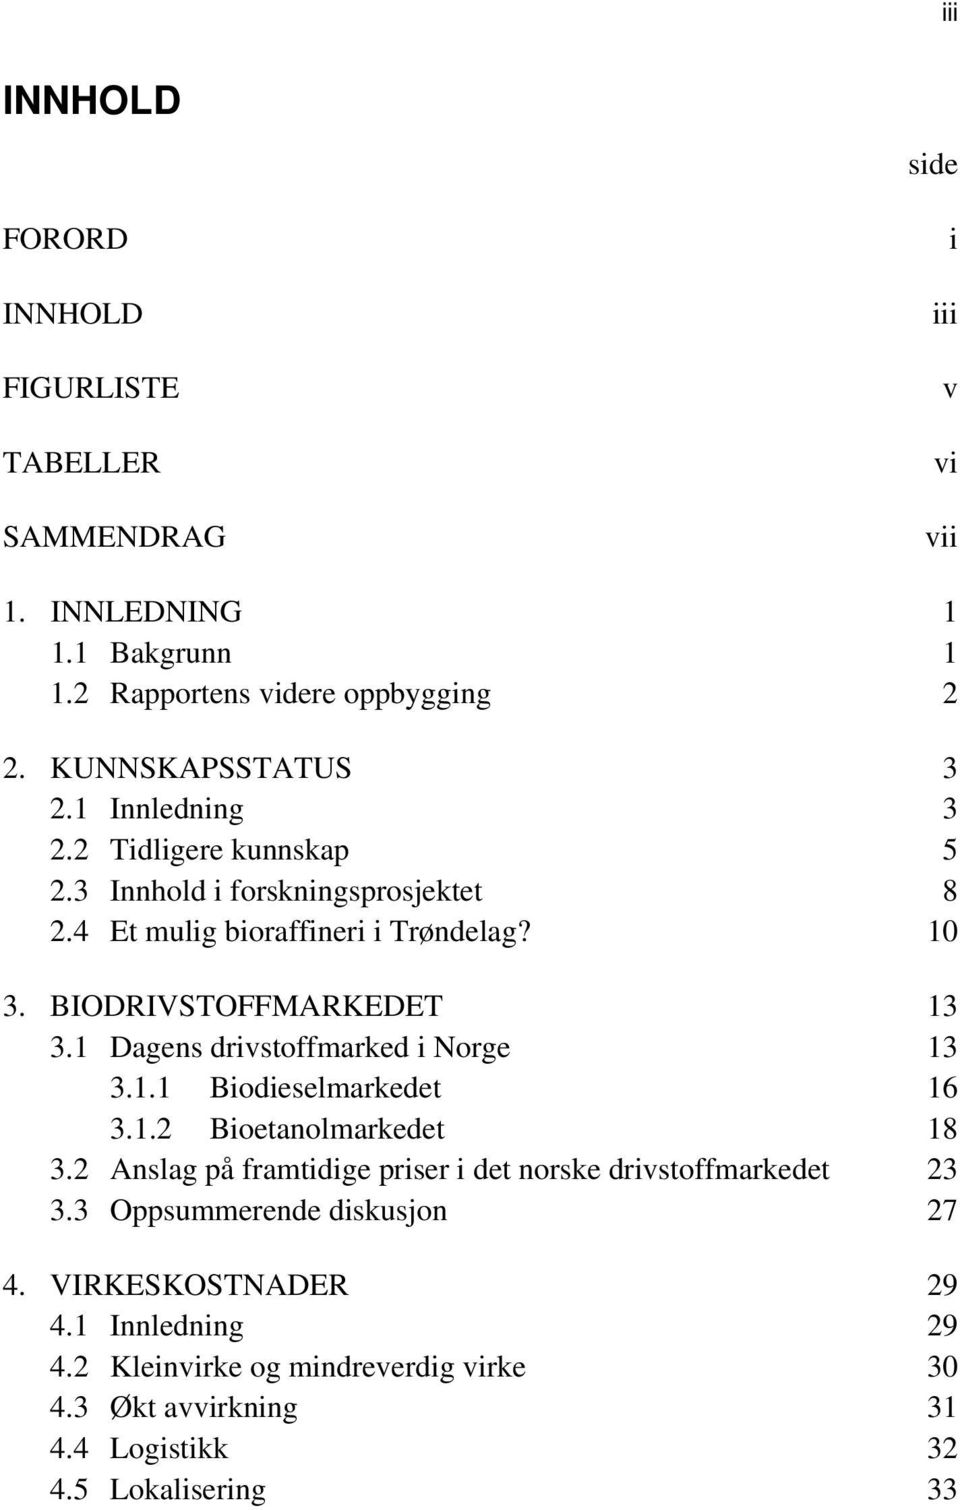 BIODRIVSTOFFMARKEDET 13 3.1 Dagens drivstoffmarked i Norge 13 3.1.1 Biodieselmarkedet 16 3.1.2 Bioetanolmarkedet 18 3.